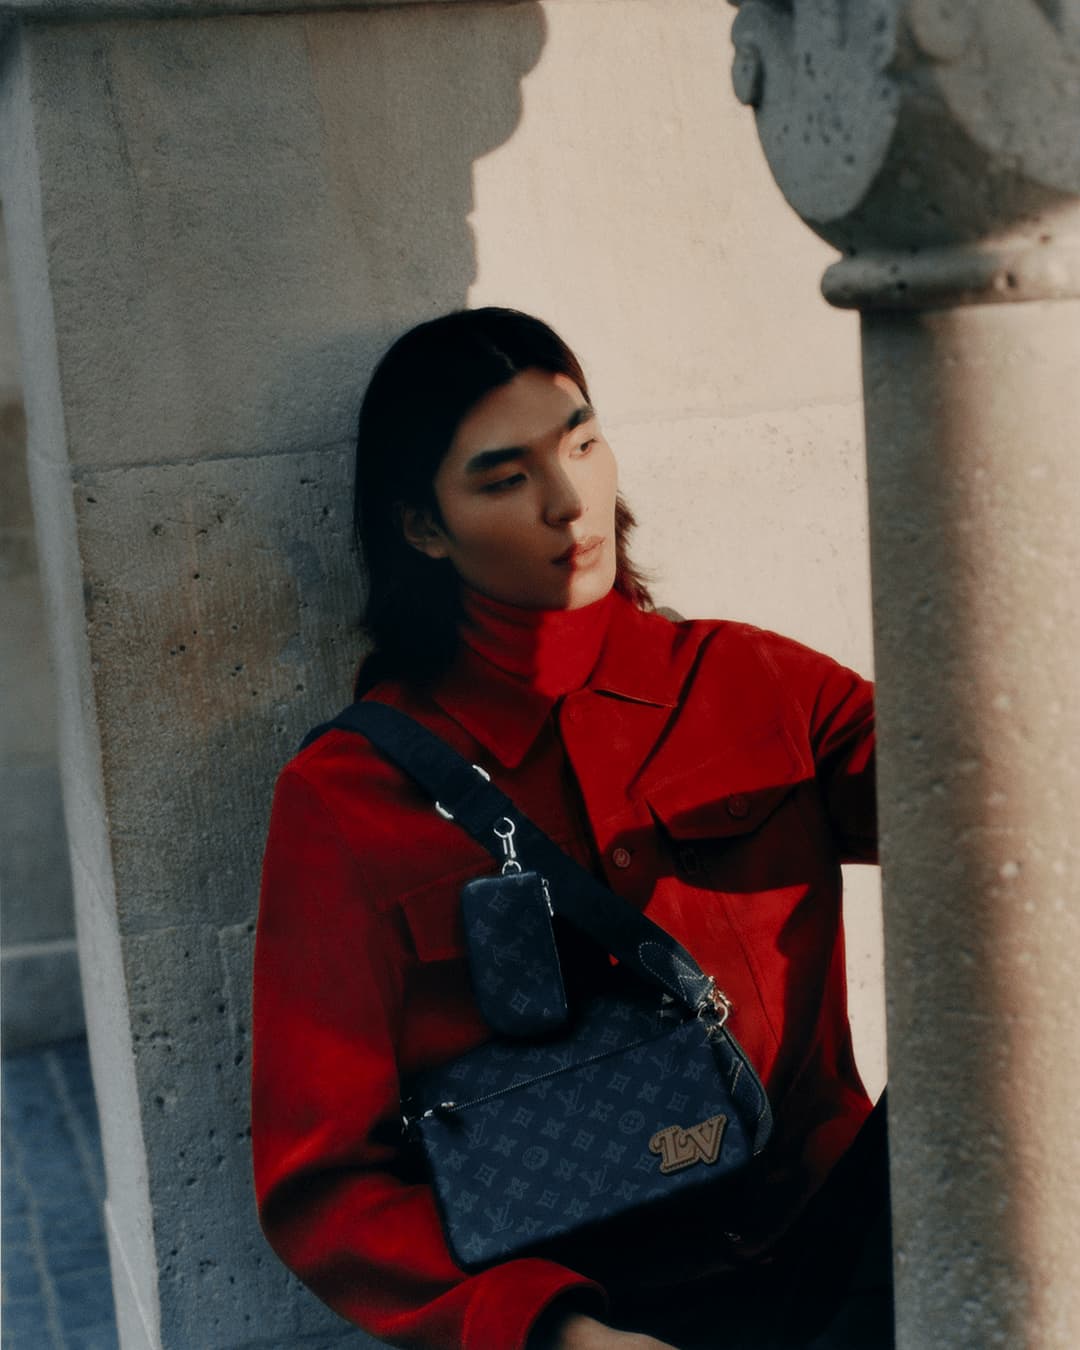 Louis Vuitton Men Pre-collection FW23 - Digital Campaign #6 on Vimeo